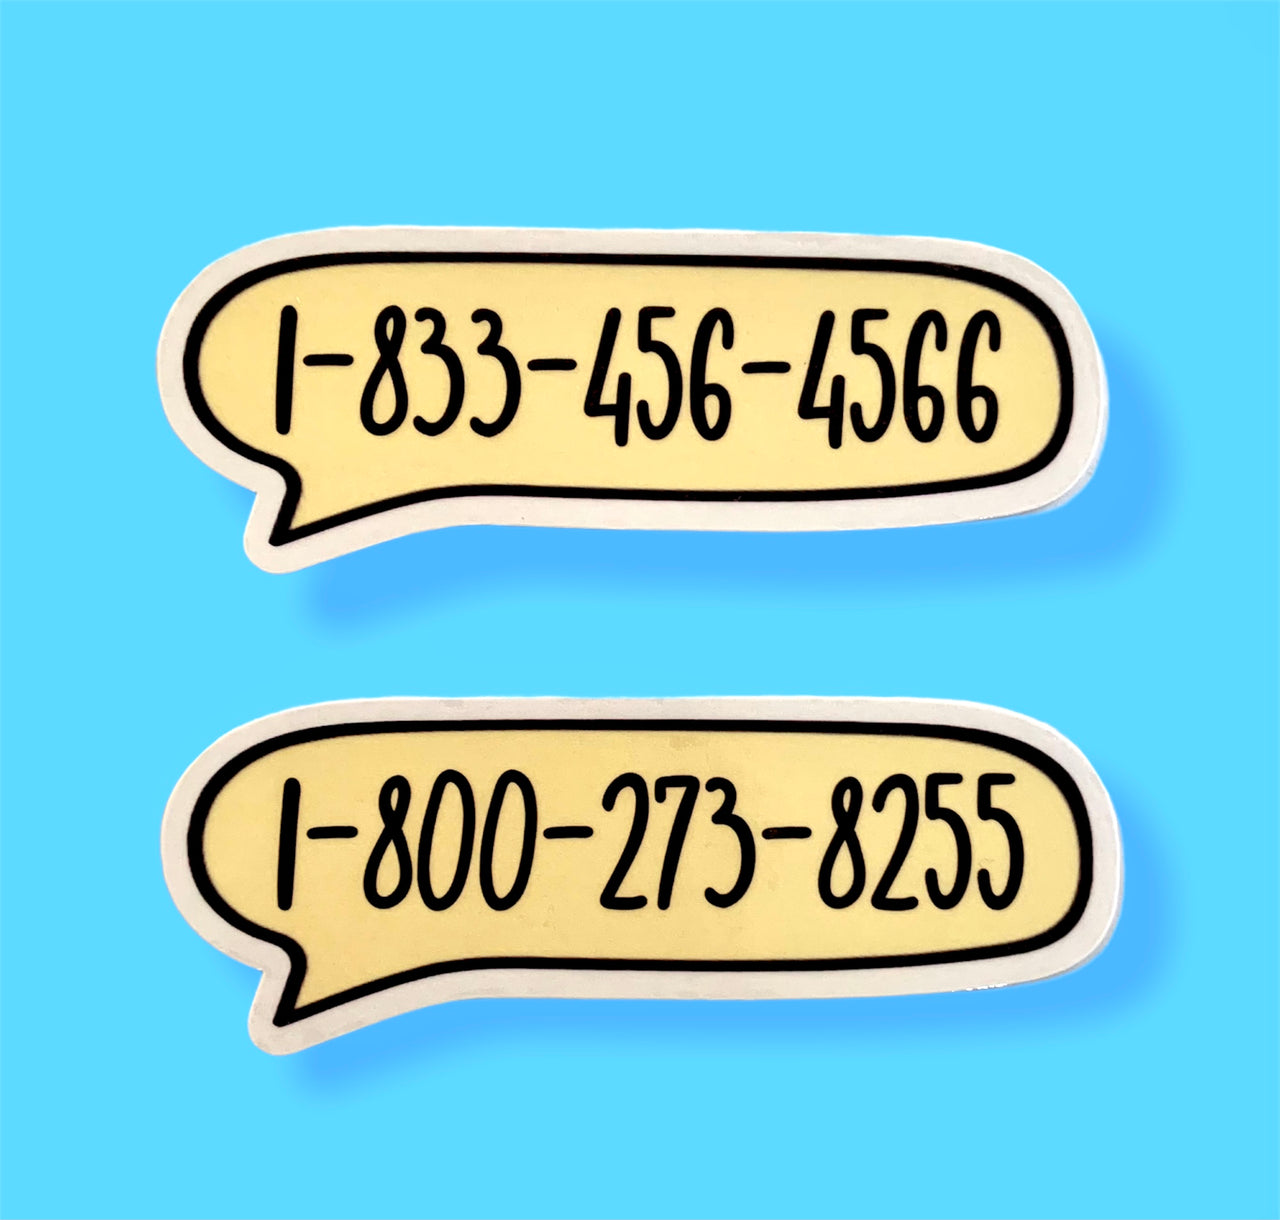 Suicide prevention hotline sticker